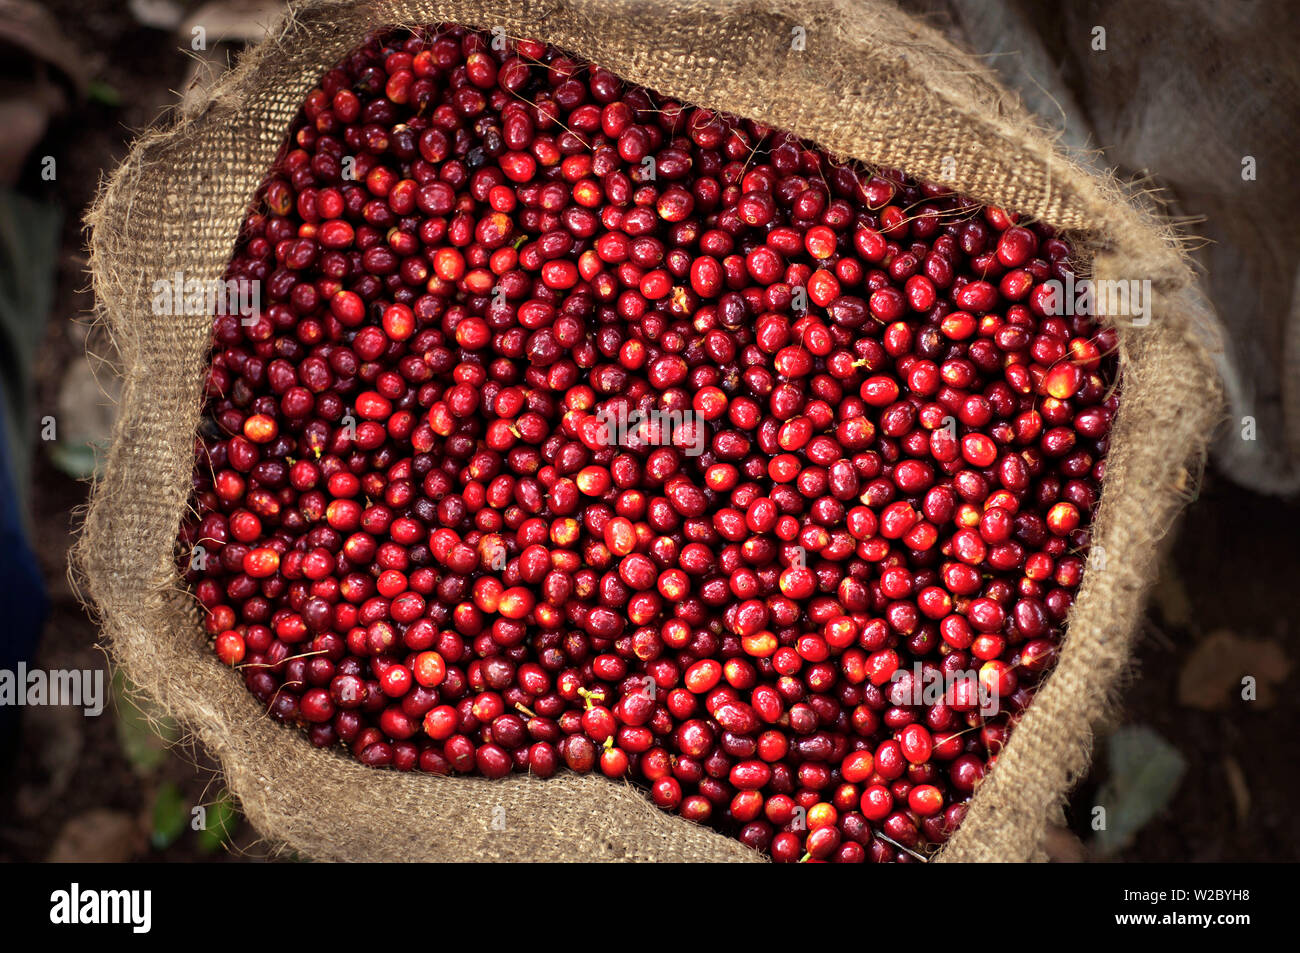 El Salvador, Full Bag Of Coffee Cherries, Picked, Coffee Farm, Finca Malacara, Slopes Of The Santa Ana Volcano, High Altitude Coffee Stock Photo